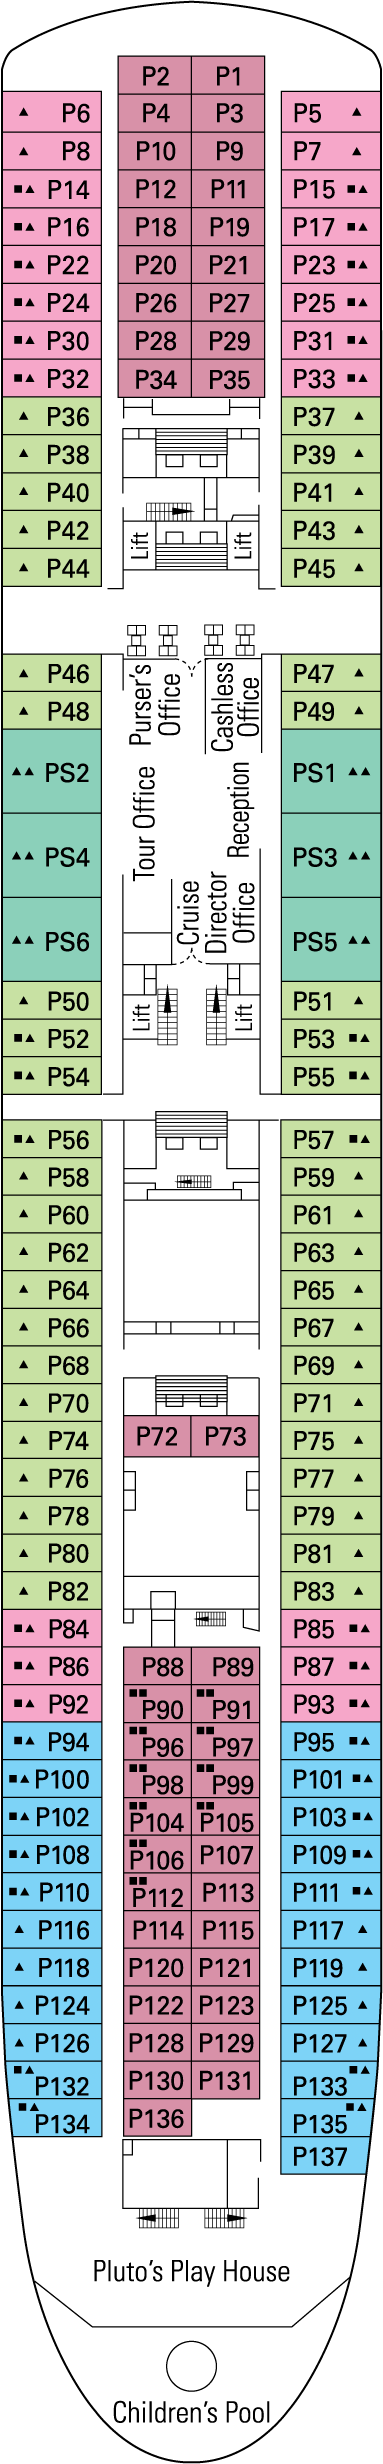 Premier Deck Deck Plan